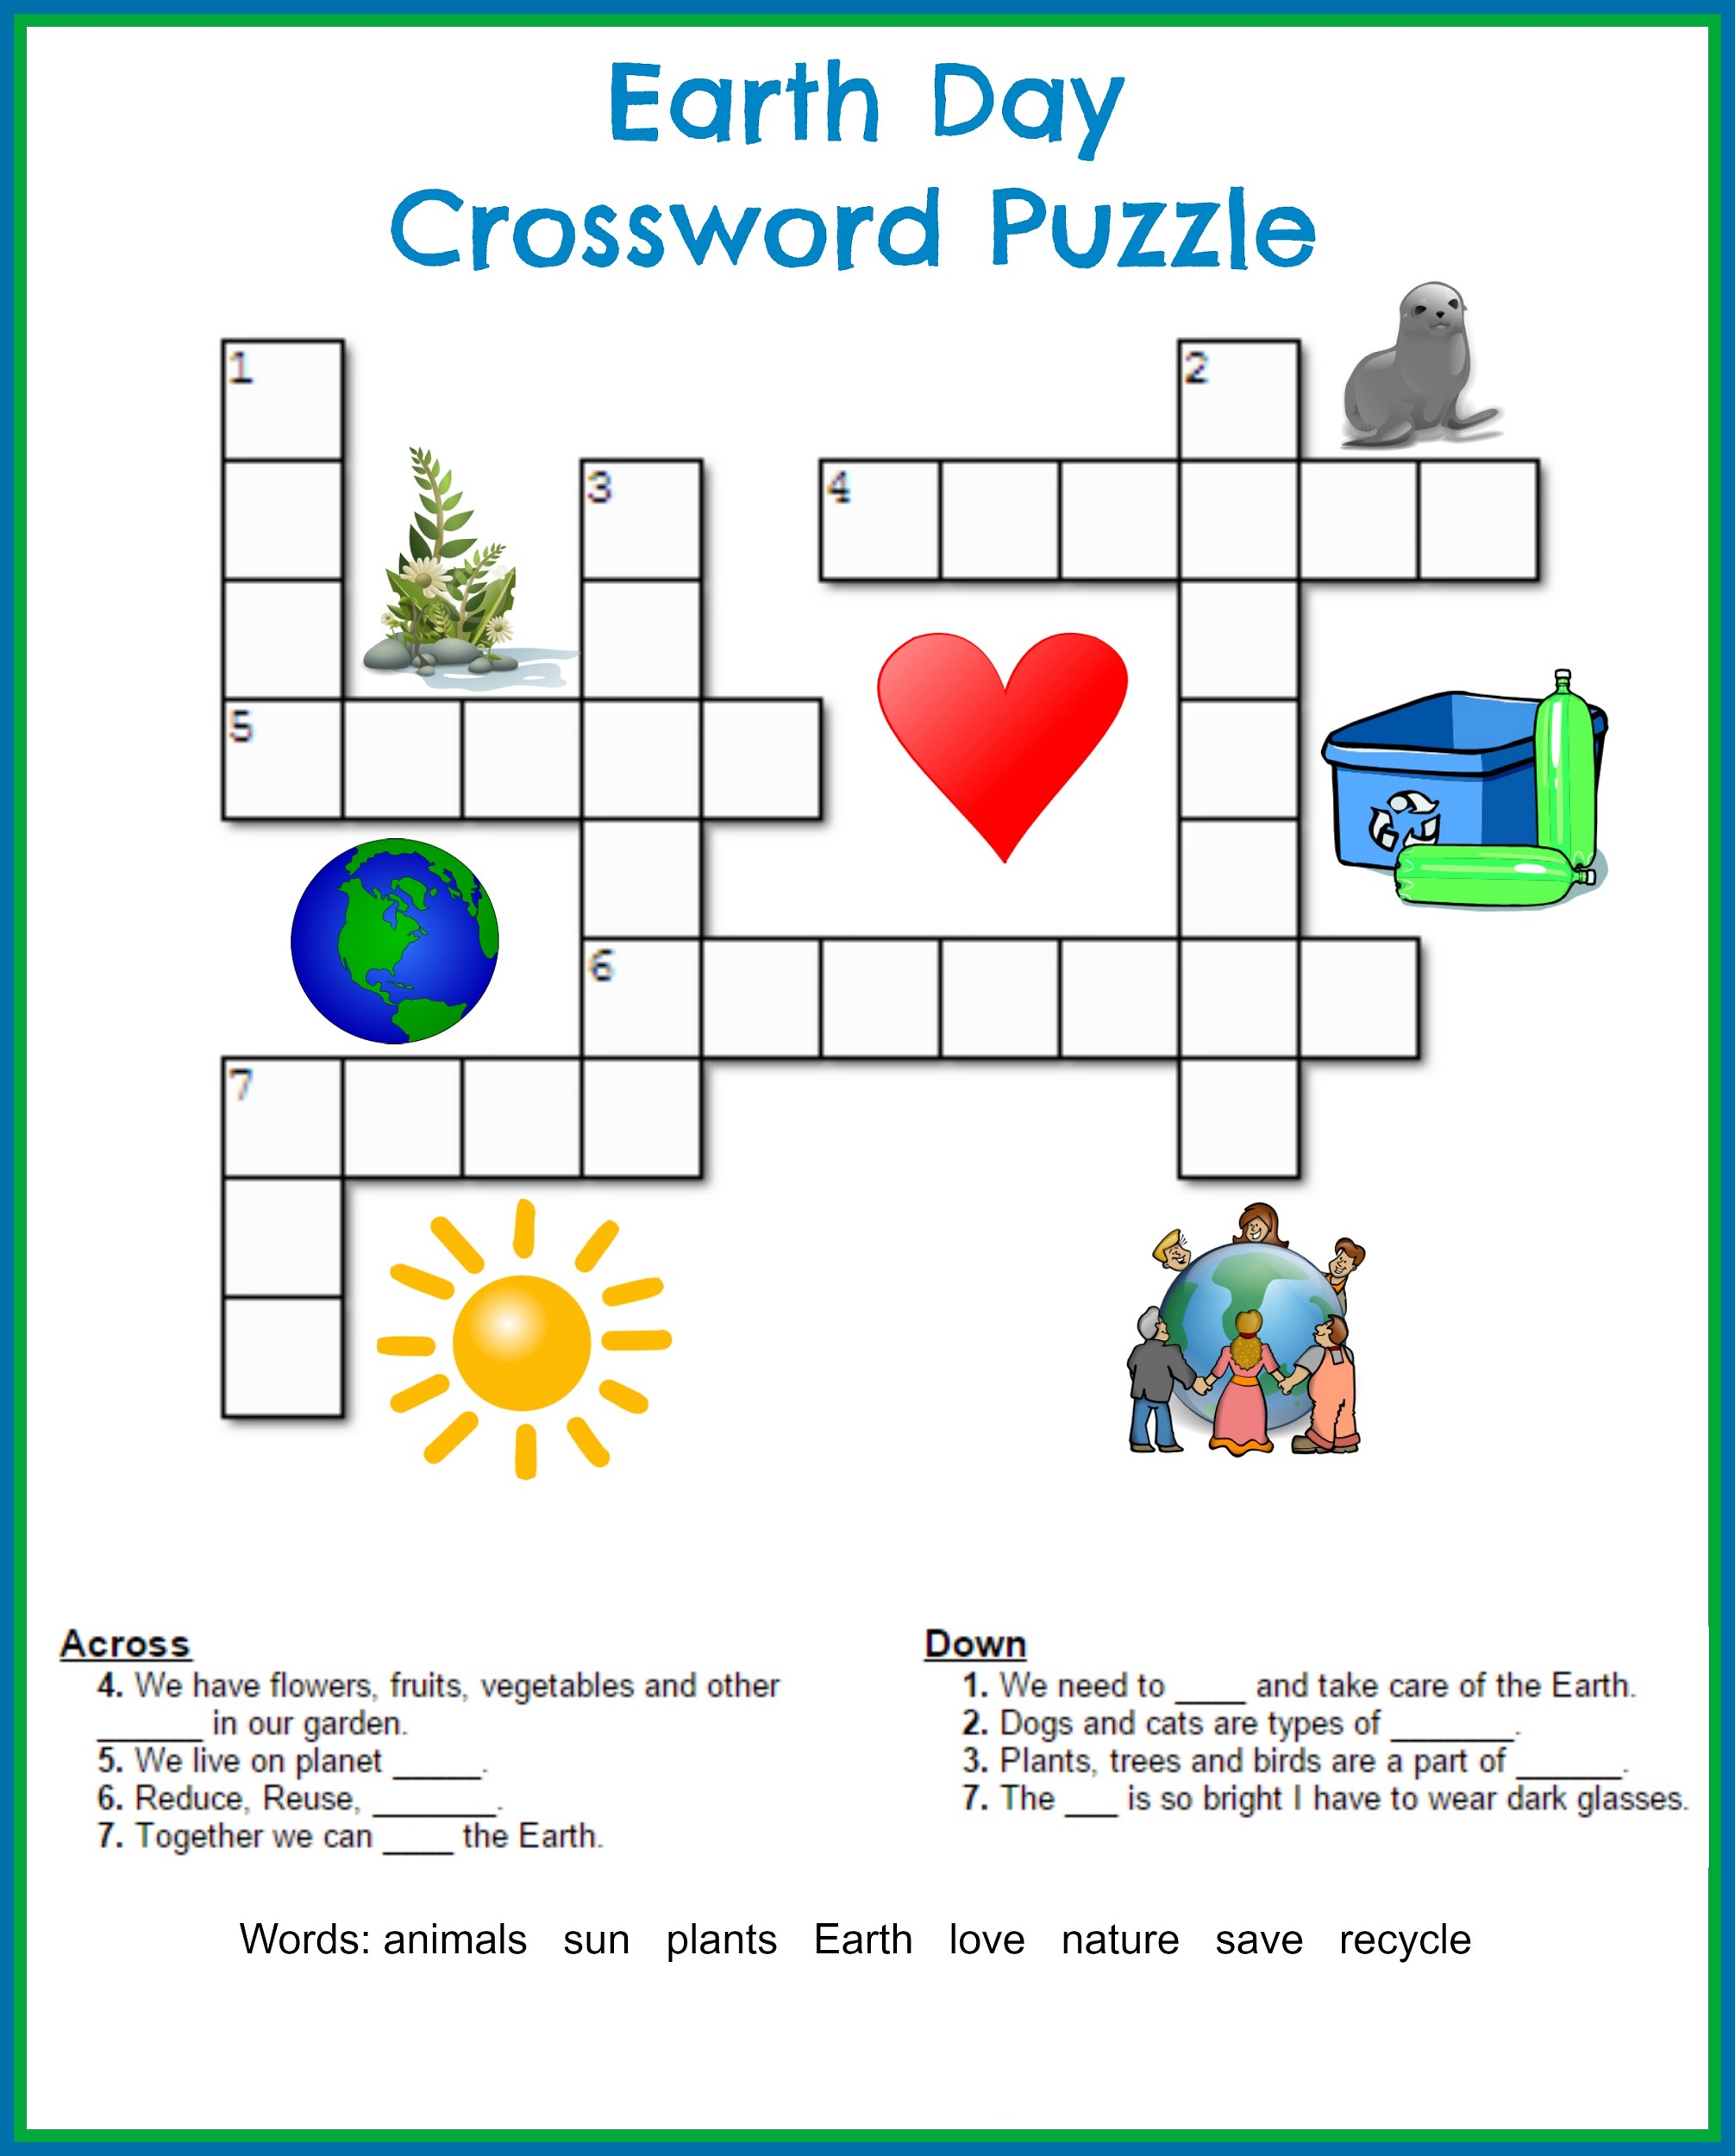 crossword-puzzles-kids-earth